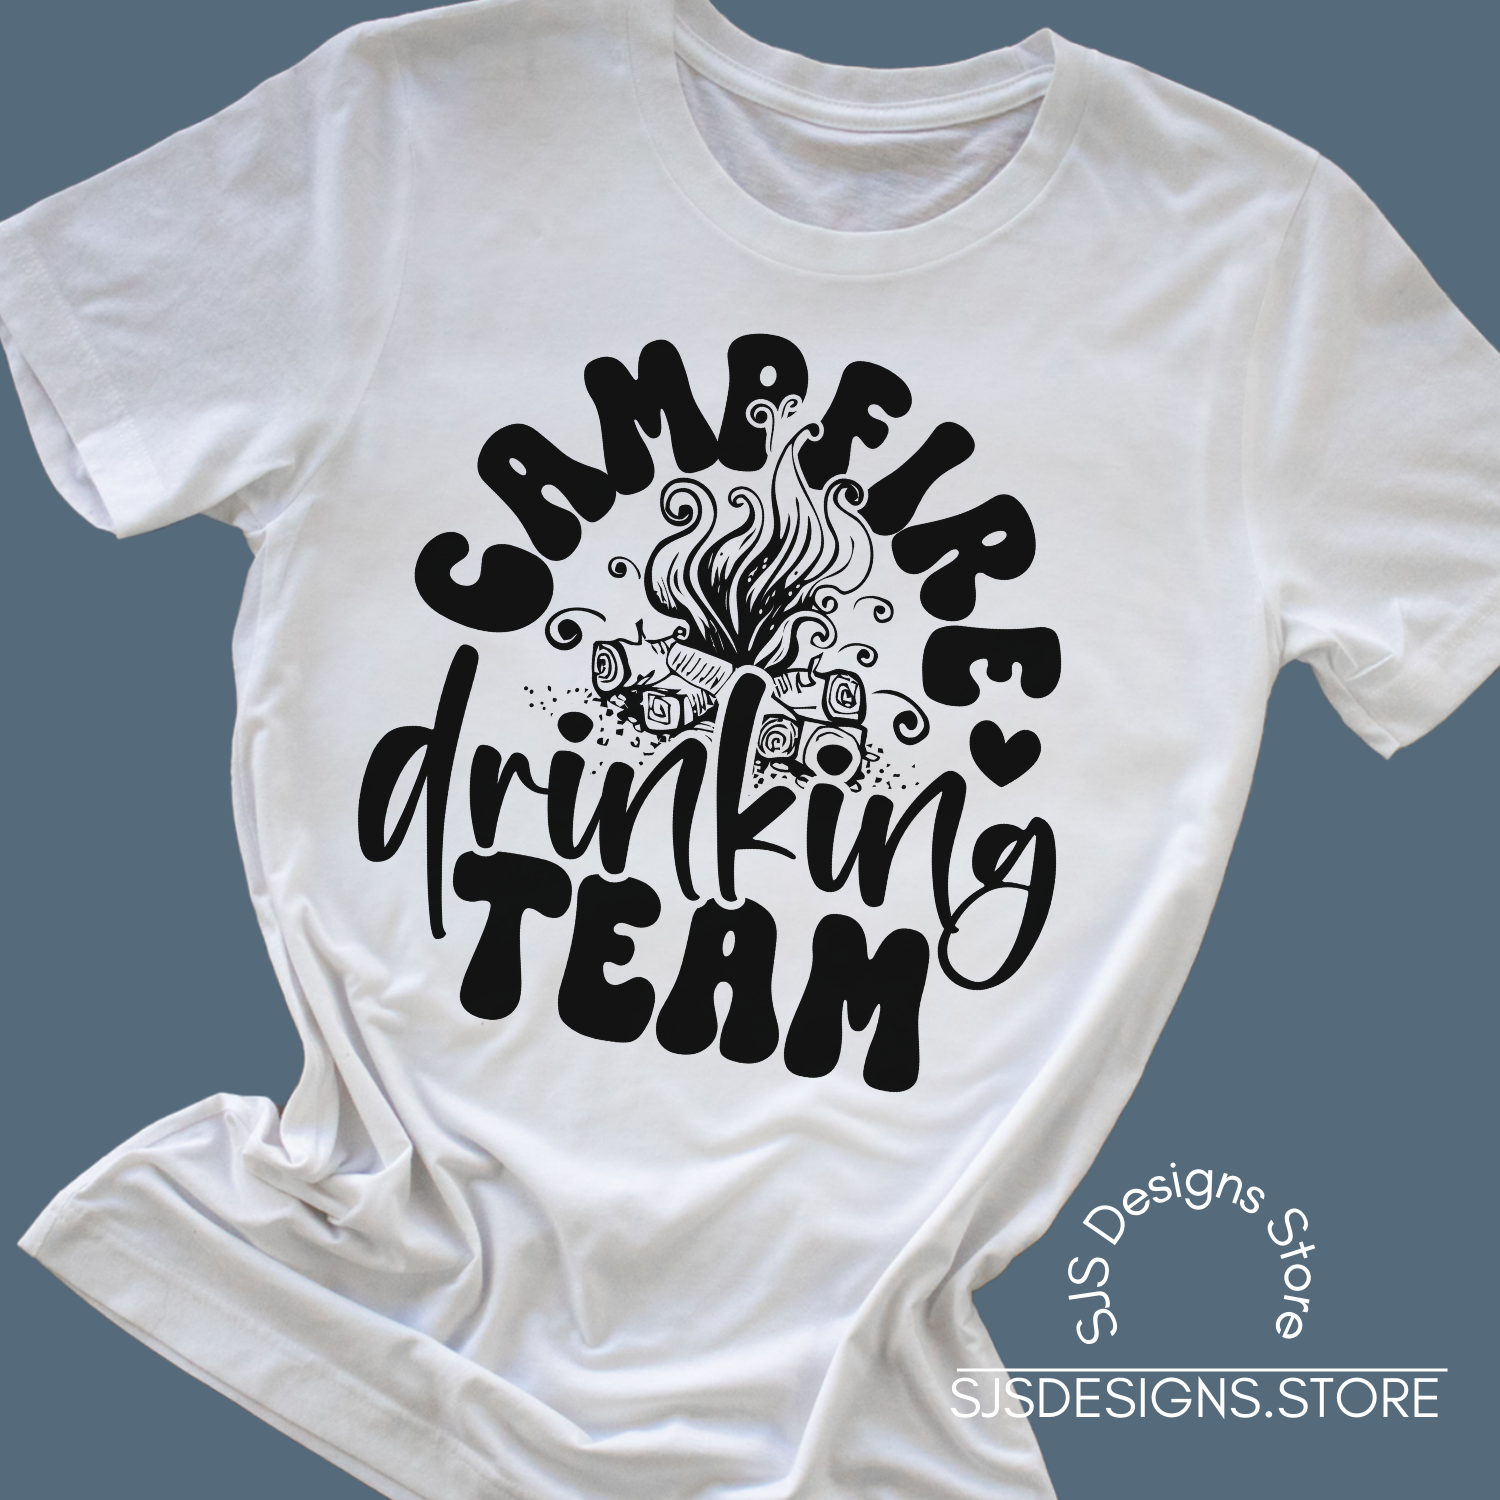 Campfire Drinking Team Shirt